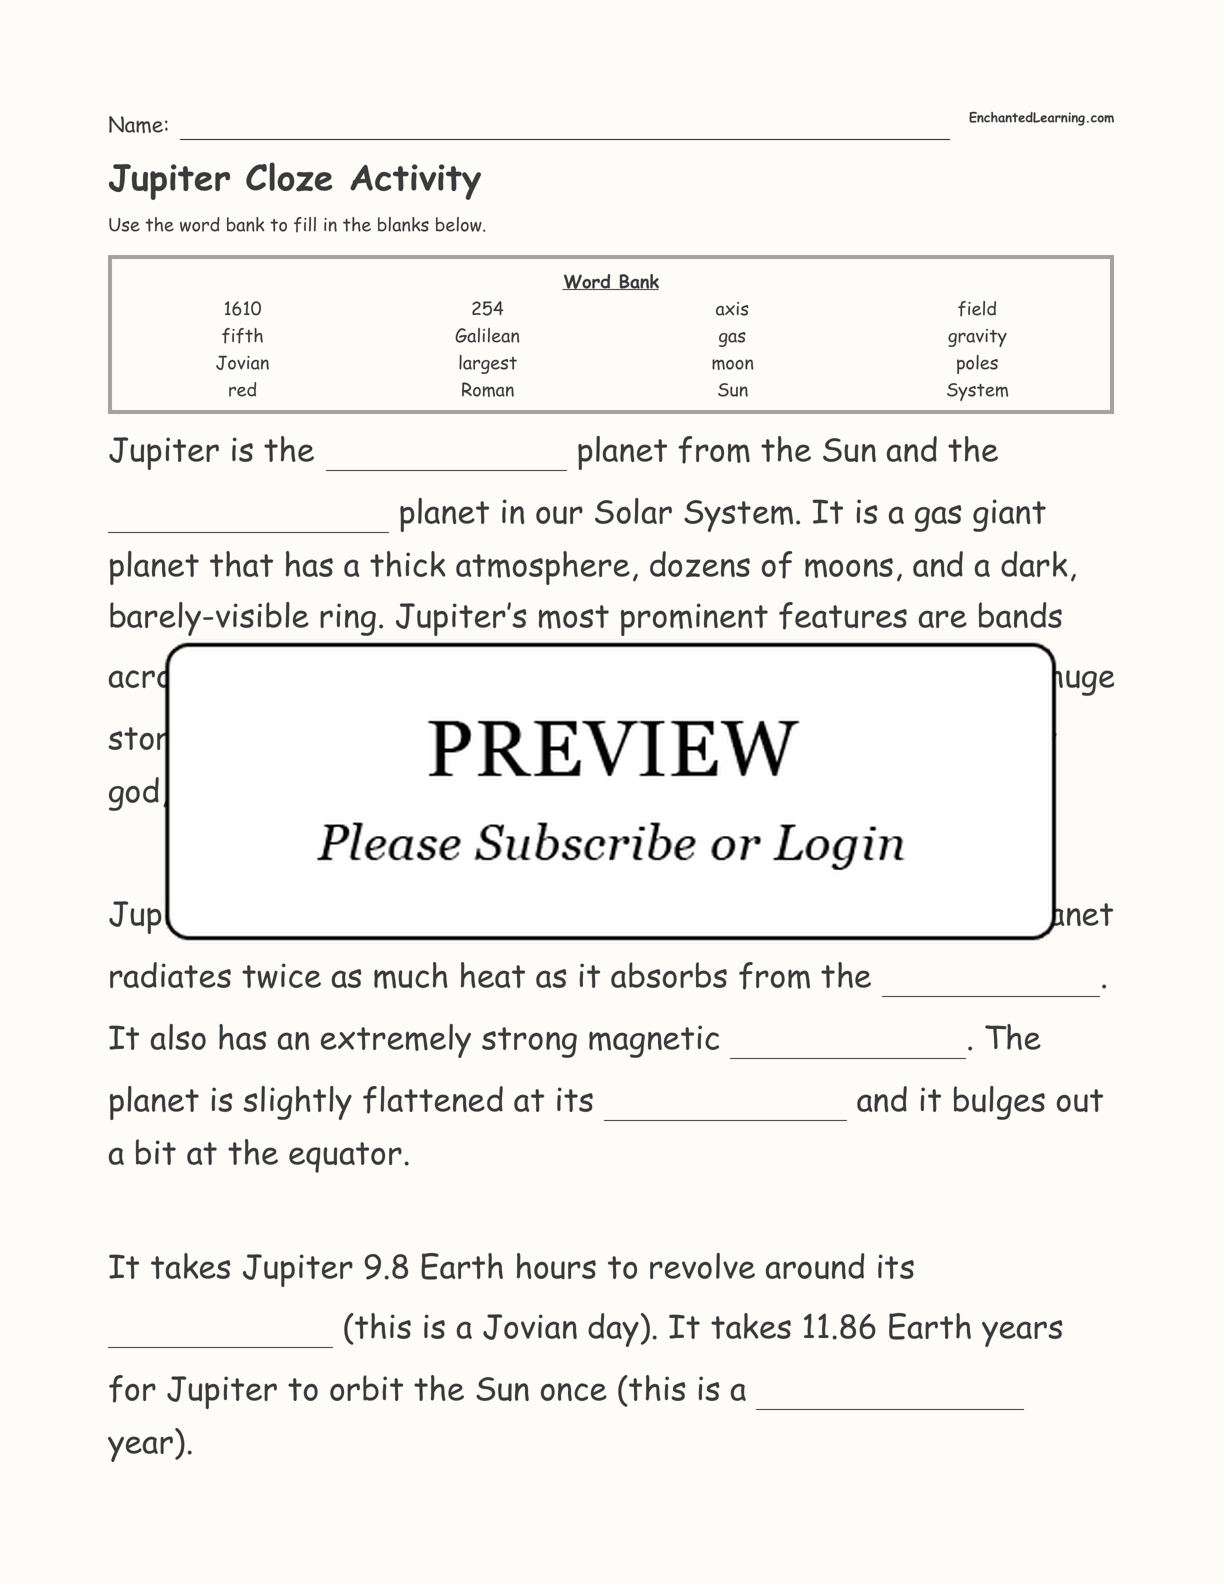 Jupiter Cloze Activity interactive worksheet page 1